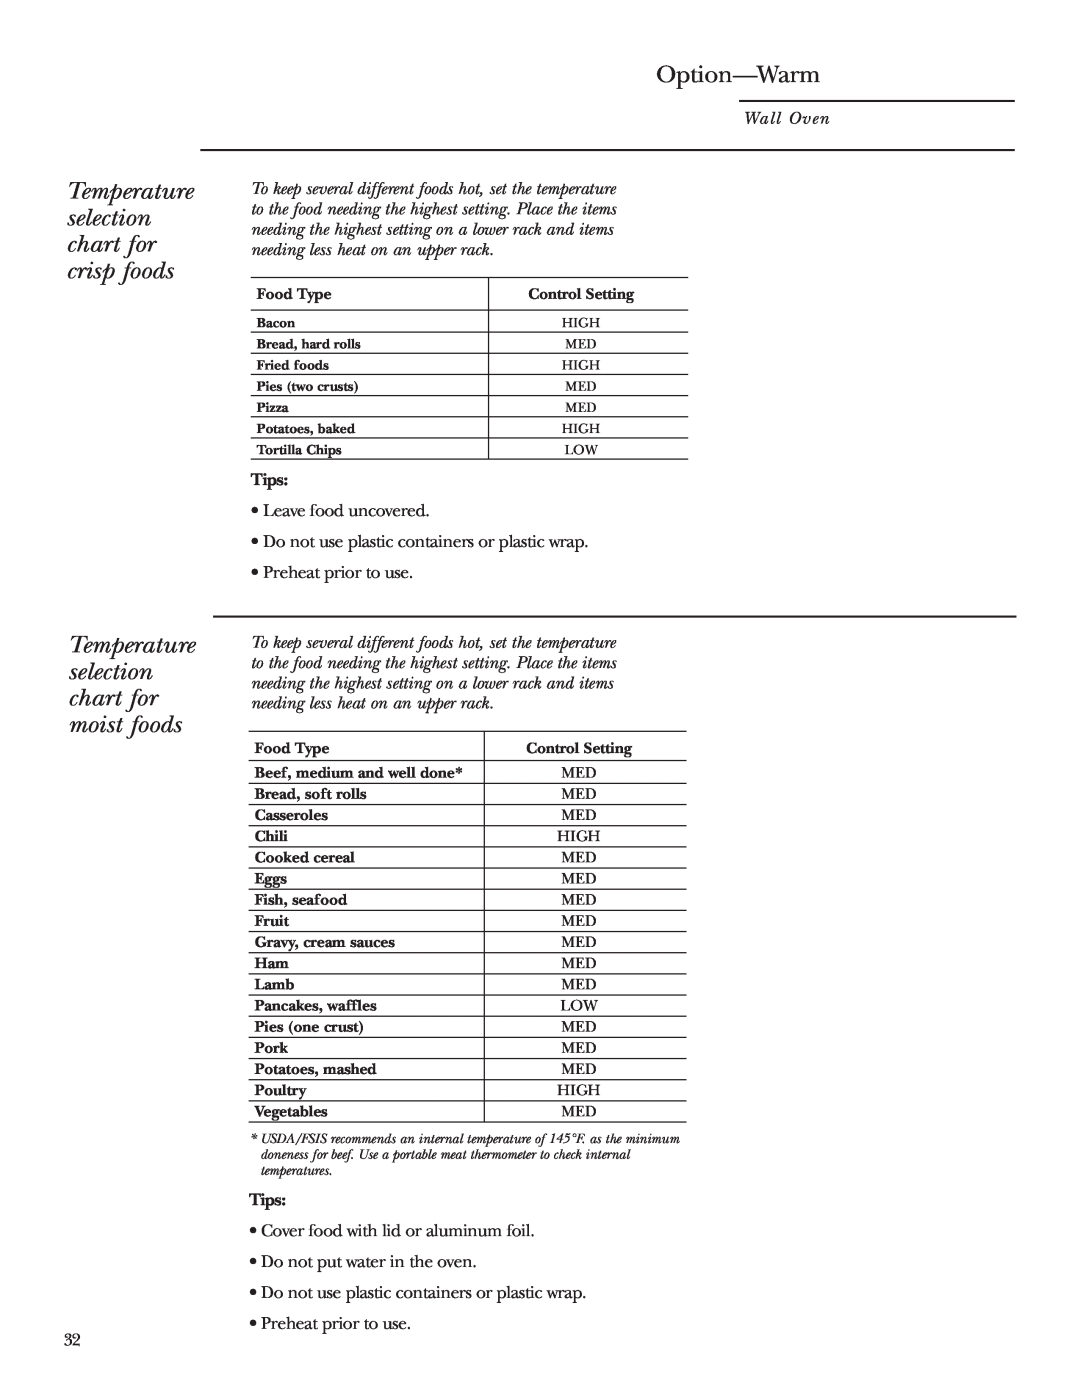 GE ZET2R, ZET1R Temperature selection chart for crisp foods, Temperature selection chart for moist foods, Option—Warm 